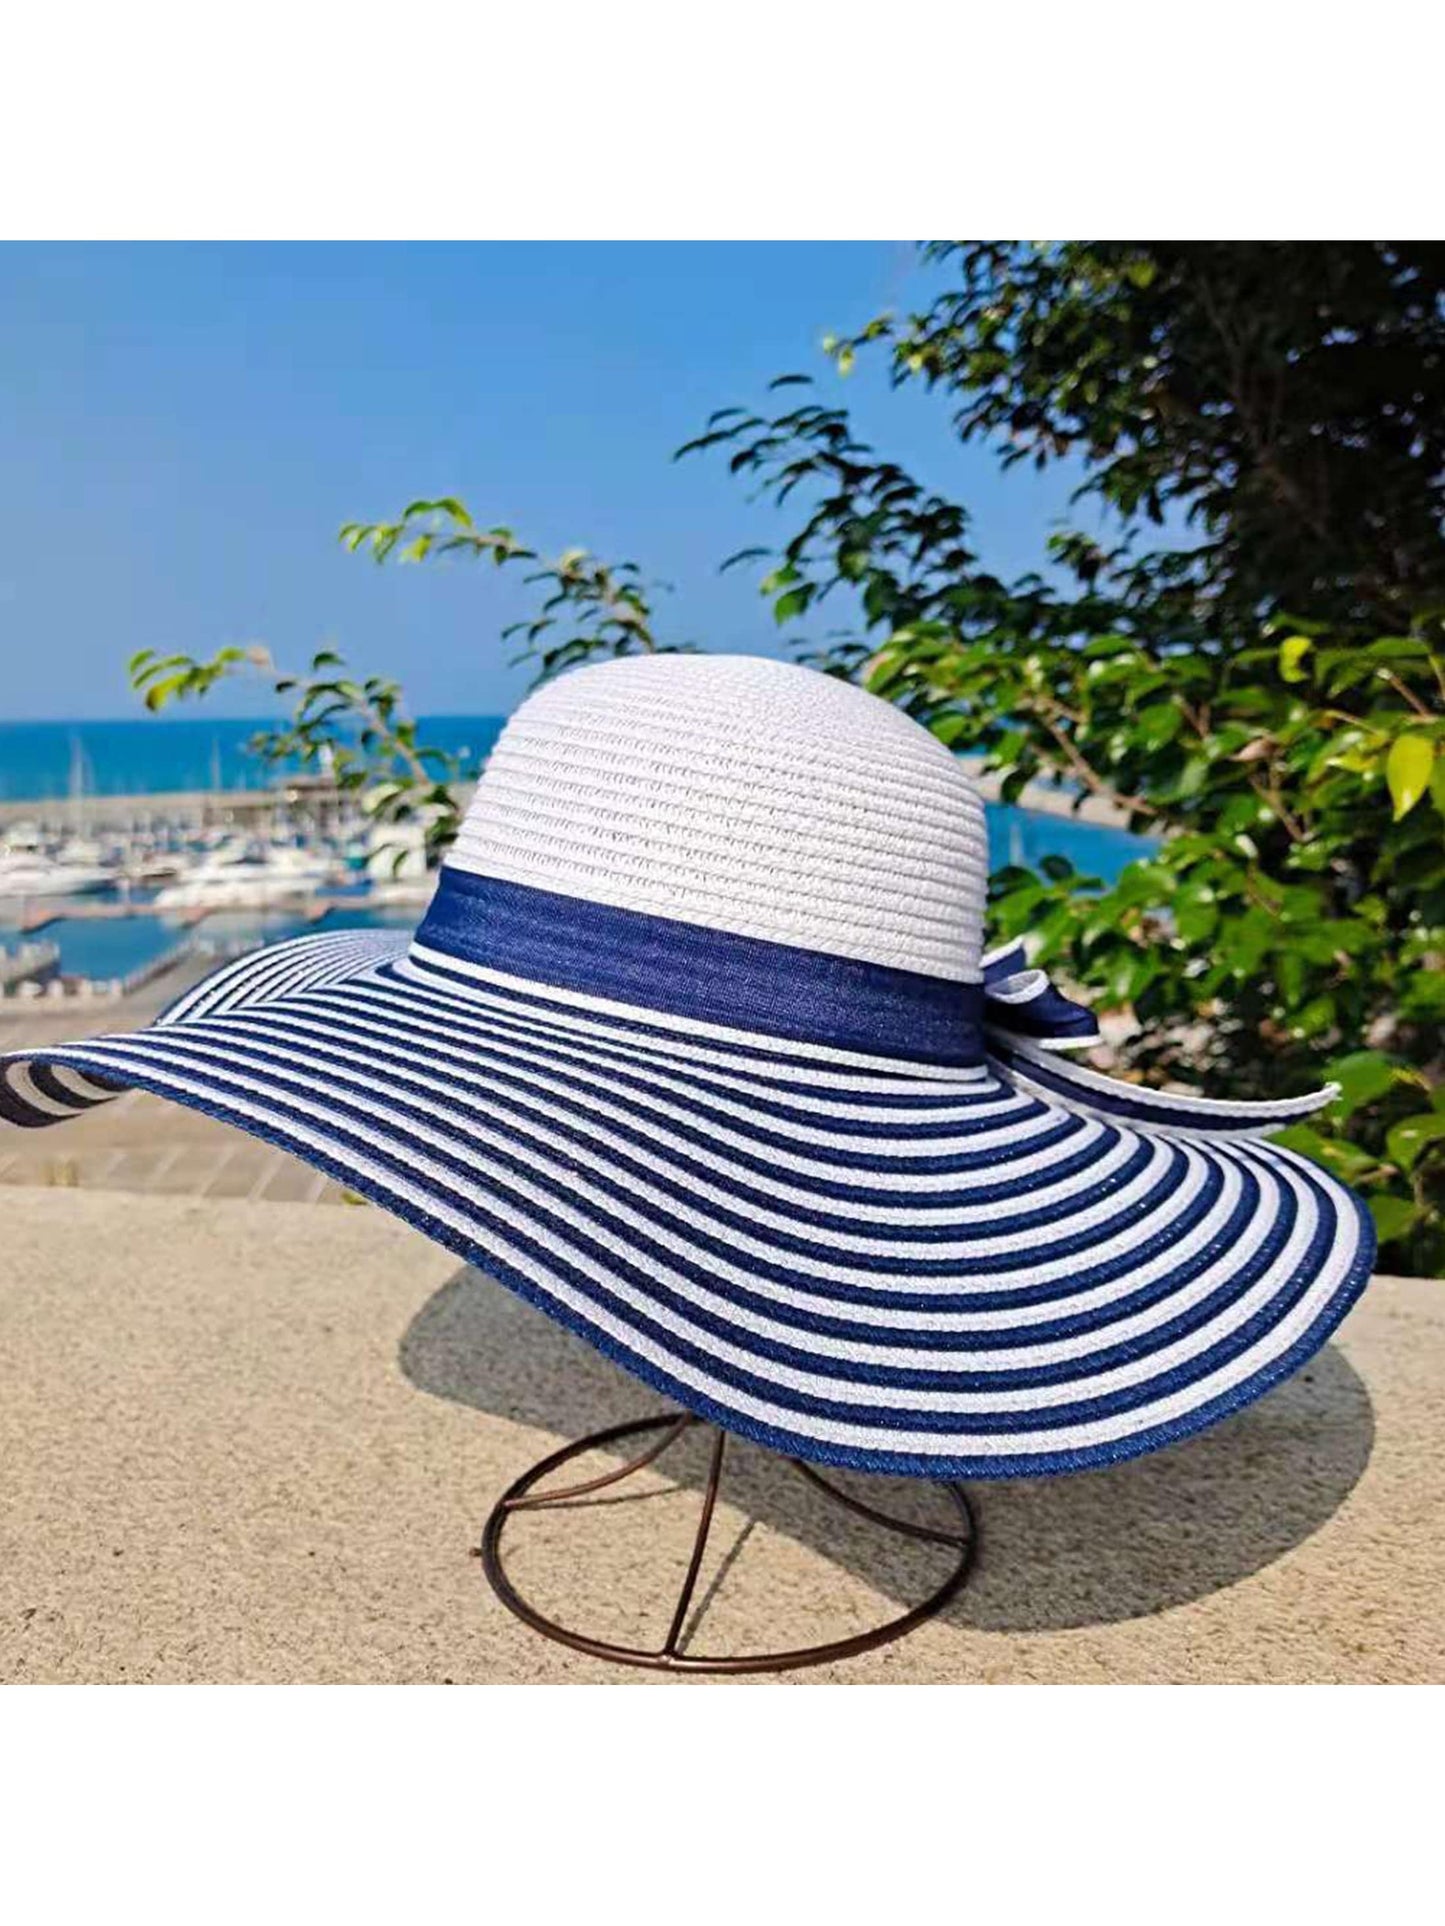 Fashionable Blue & White Striped Wide Brim Straw Hat Uv Protective